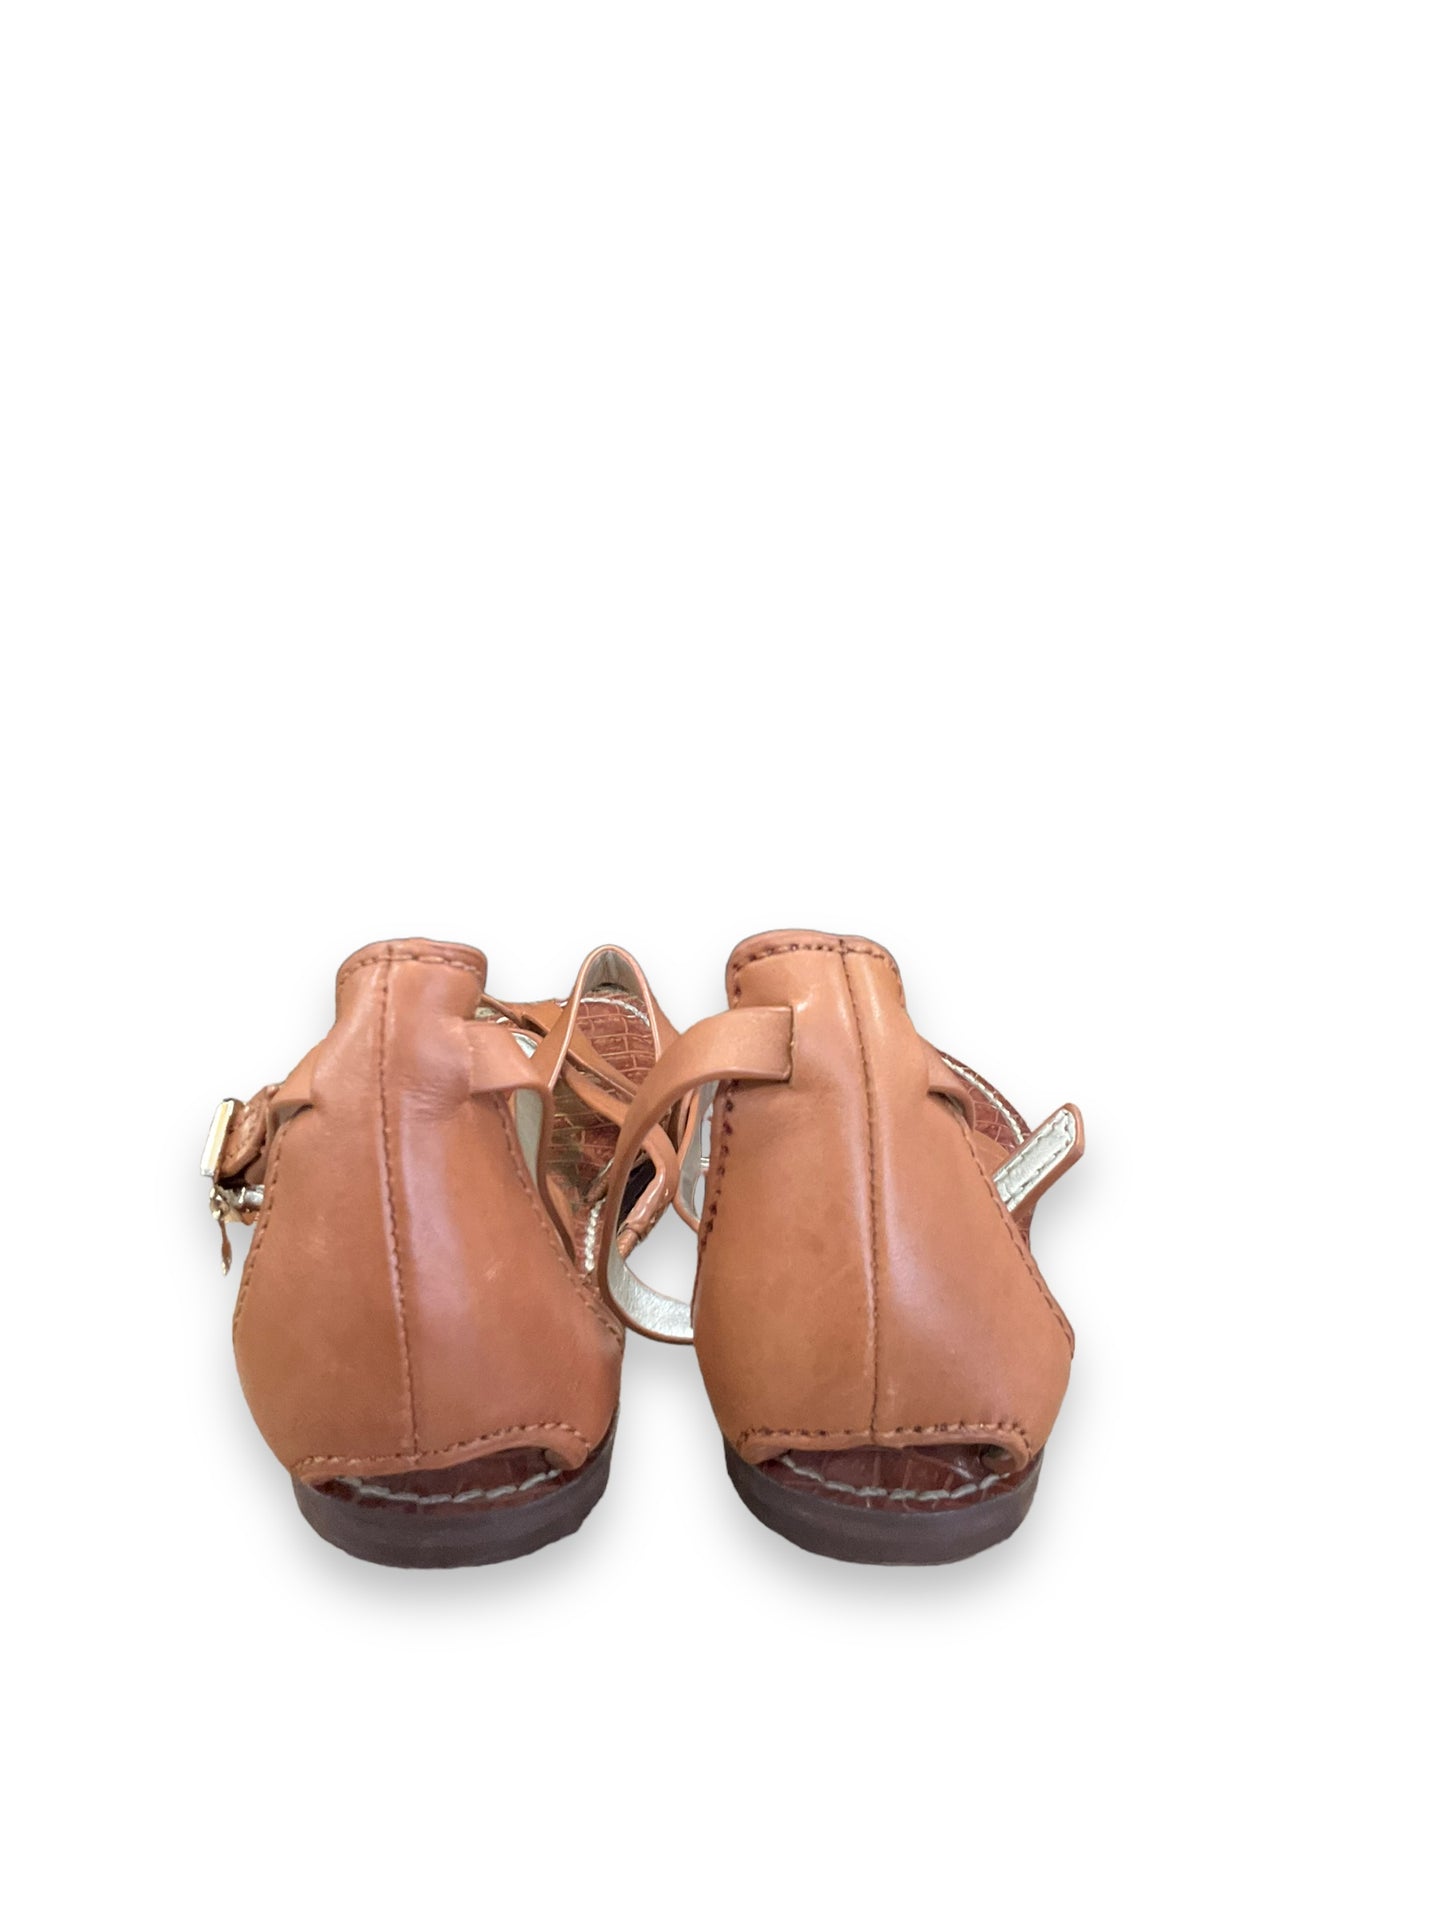 Sandals Flats By Sam Edelman  Size: 6